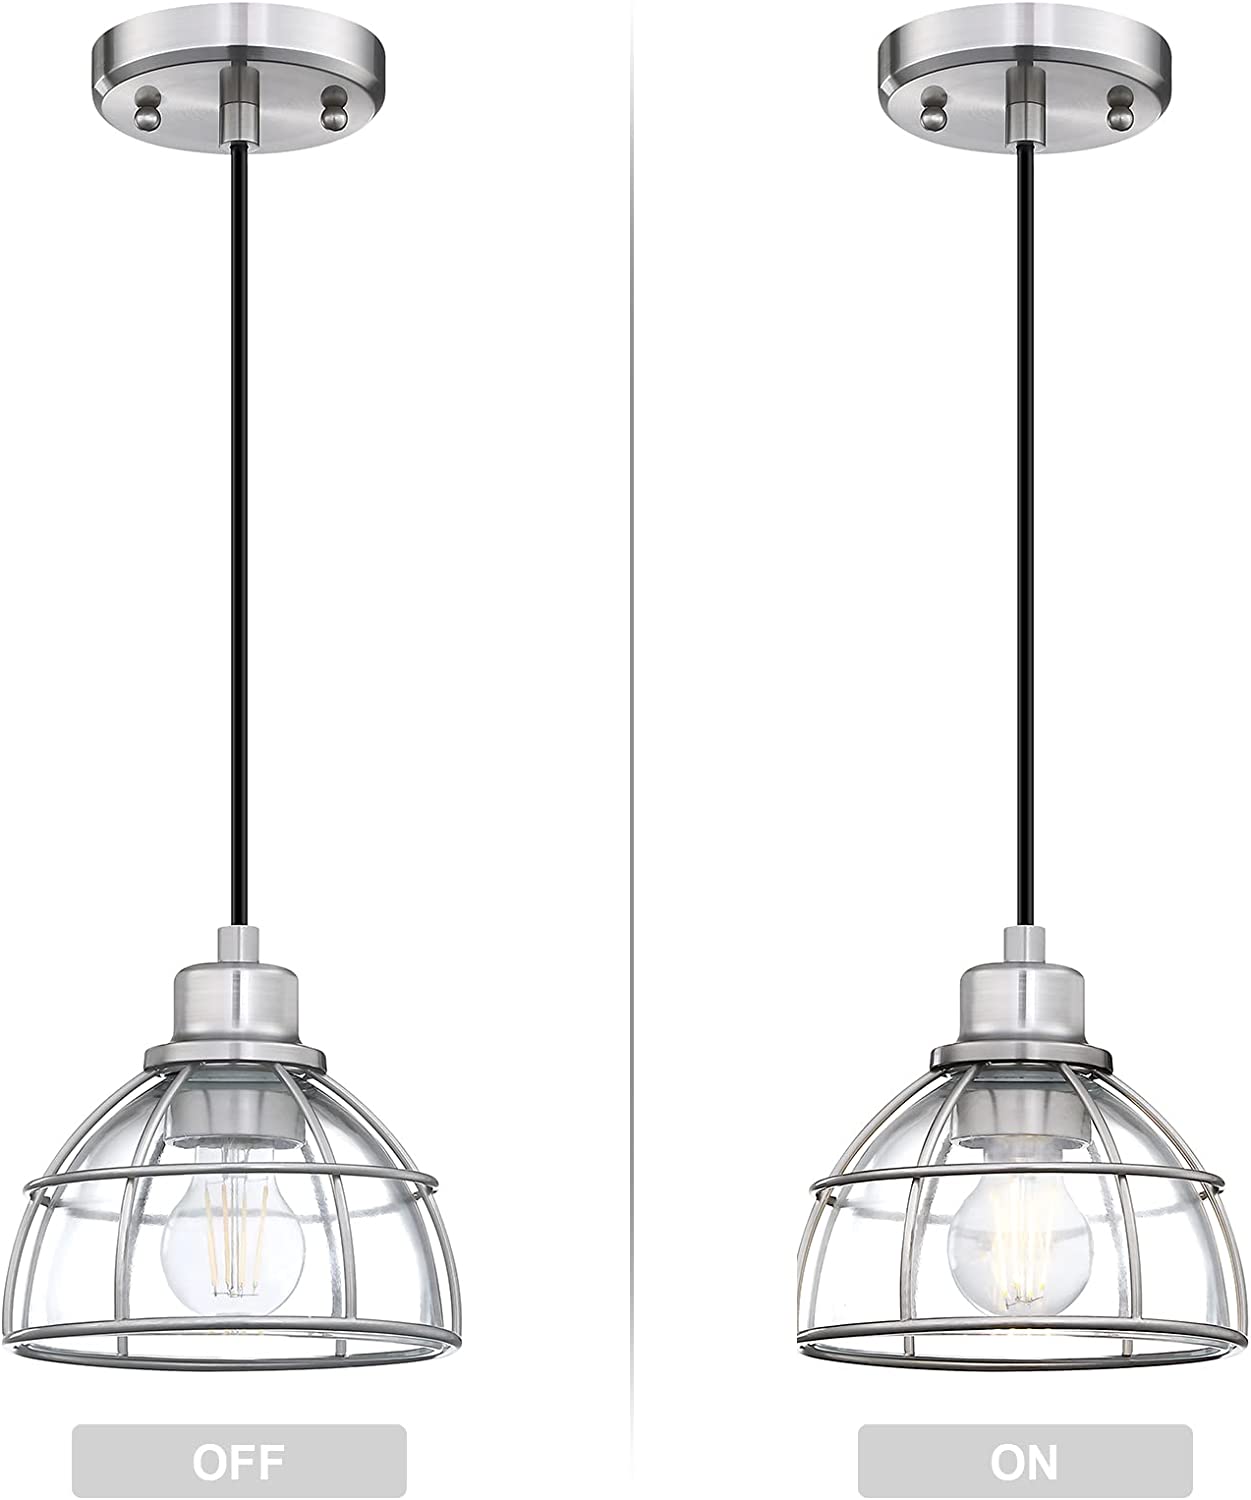 Farmhouse industrial pendant light vintage glass pendant lamp with nickel finish